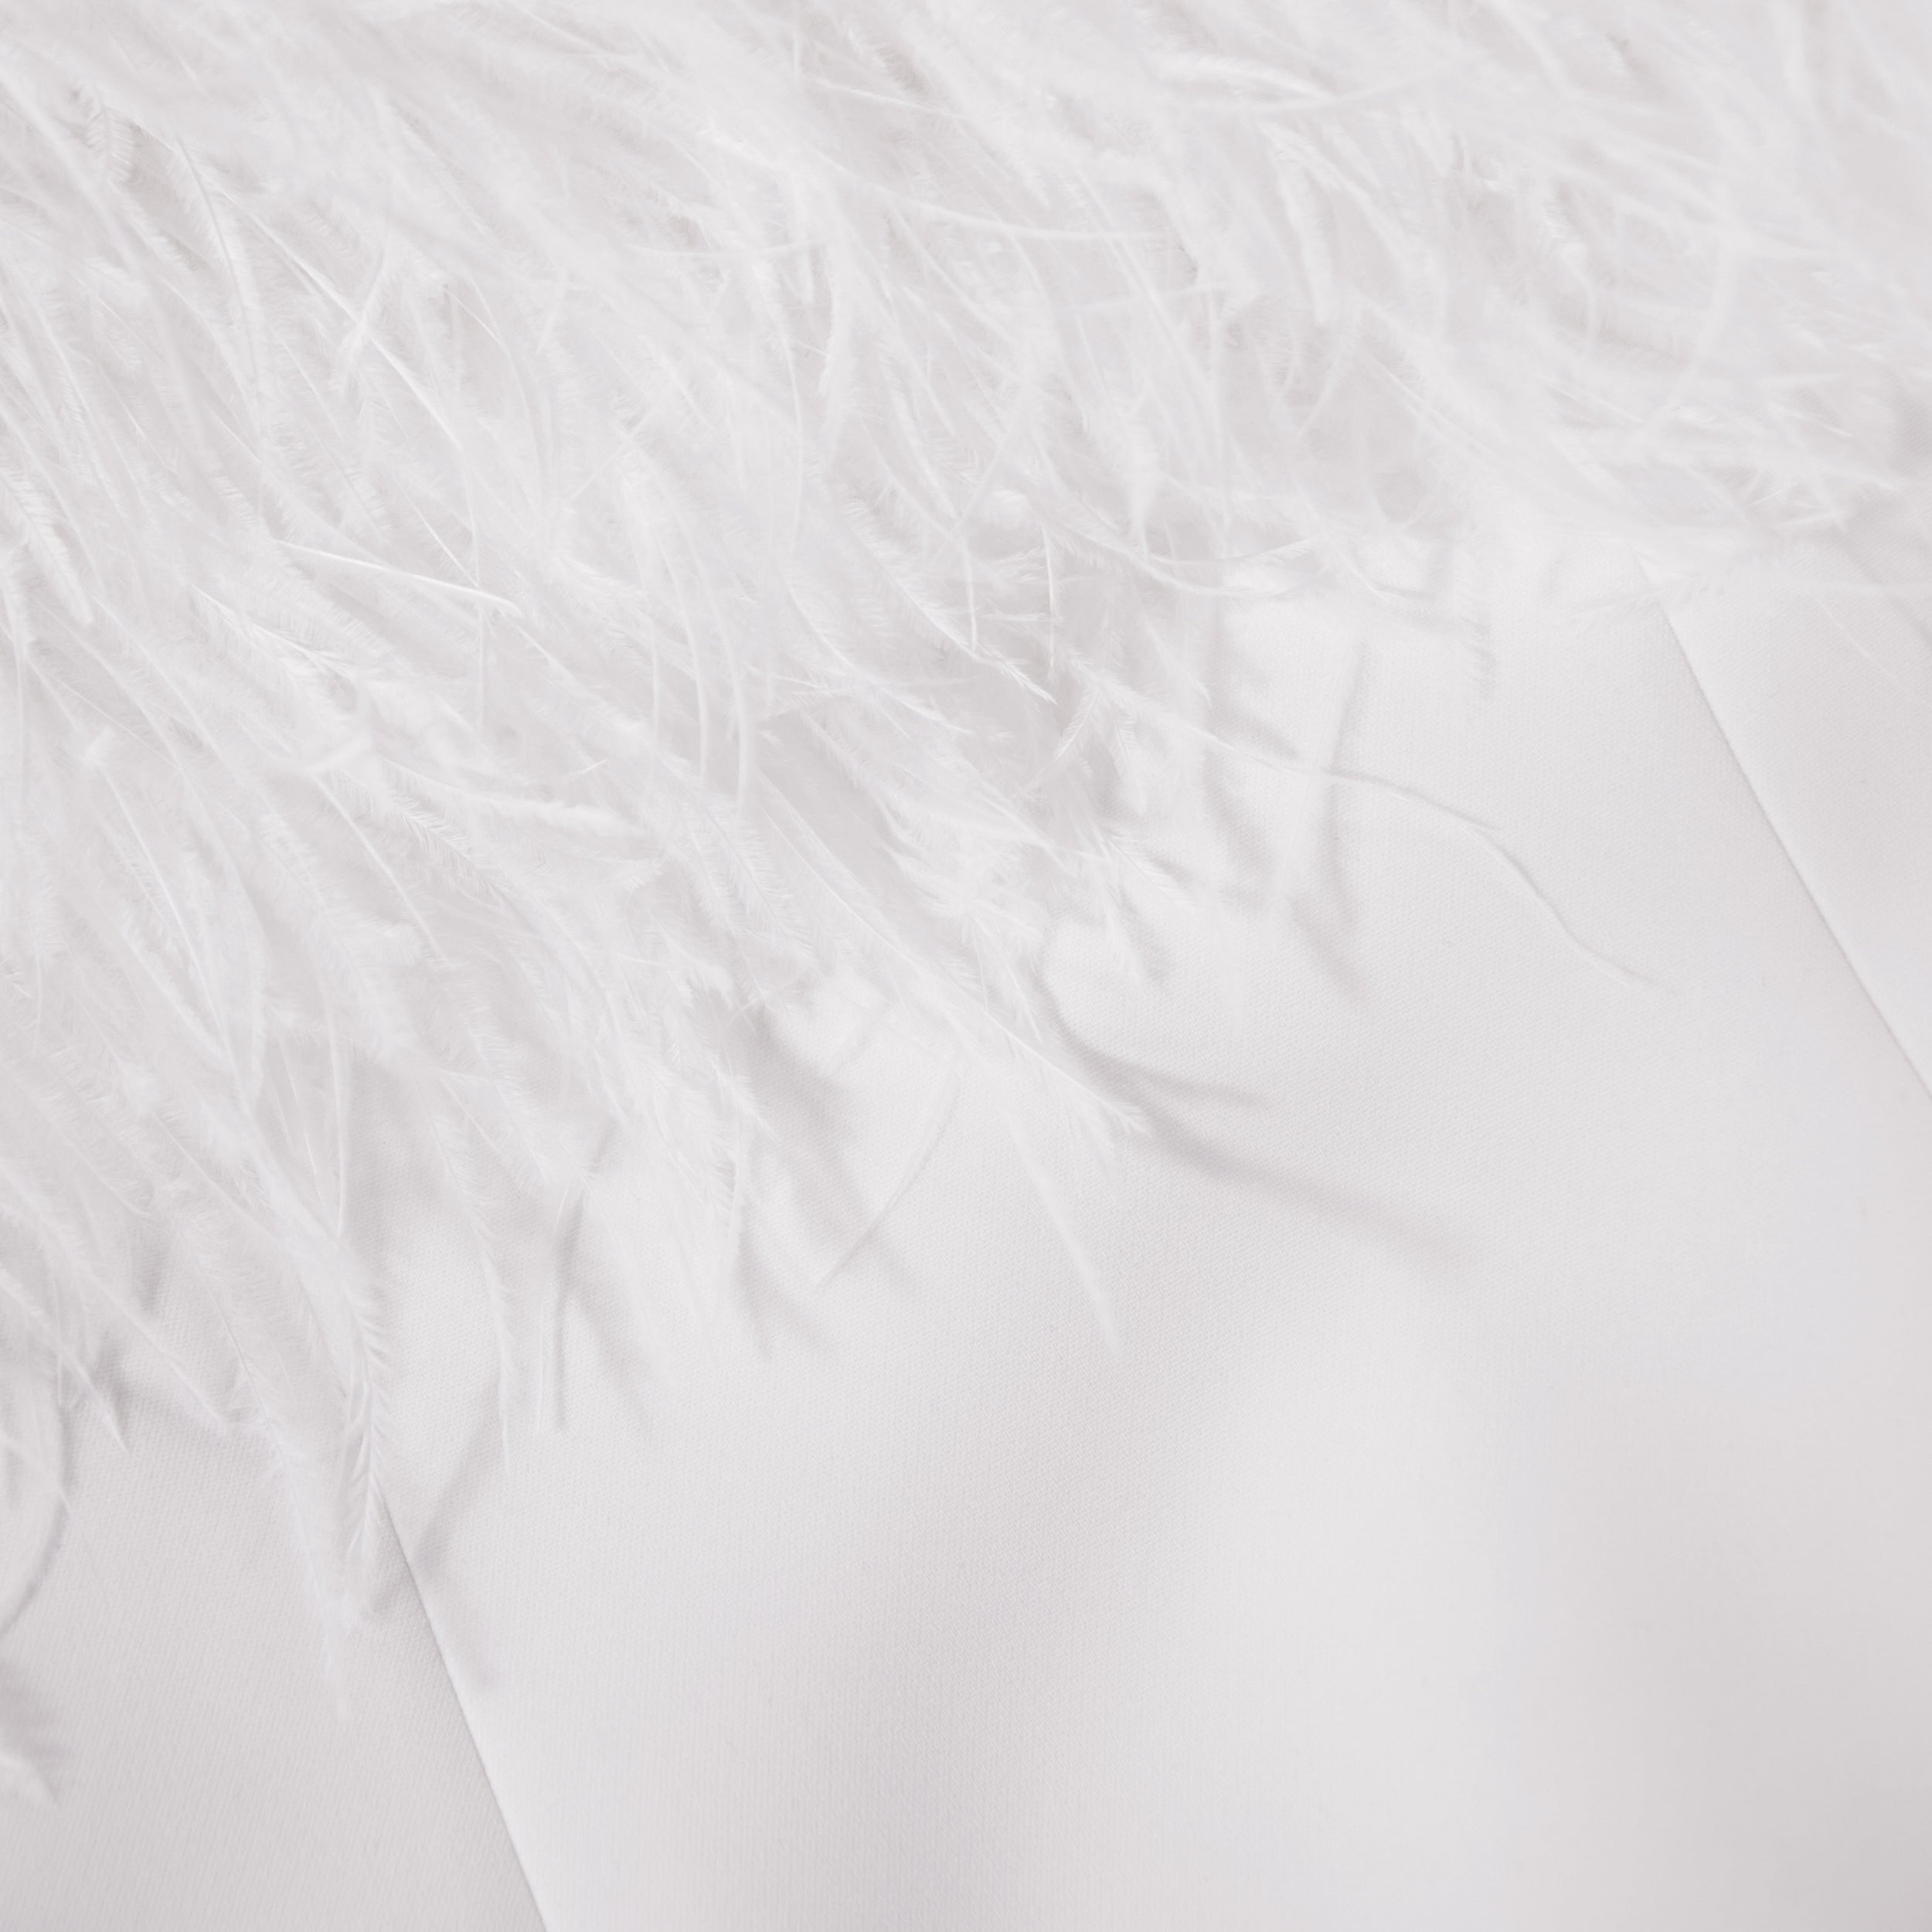 – Midi Dress Feather White self-portrait